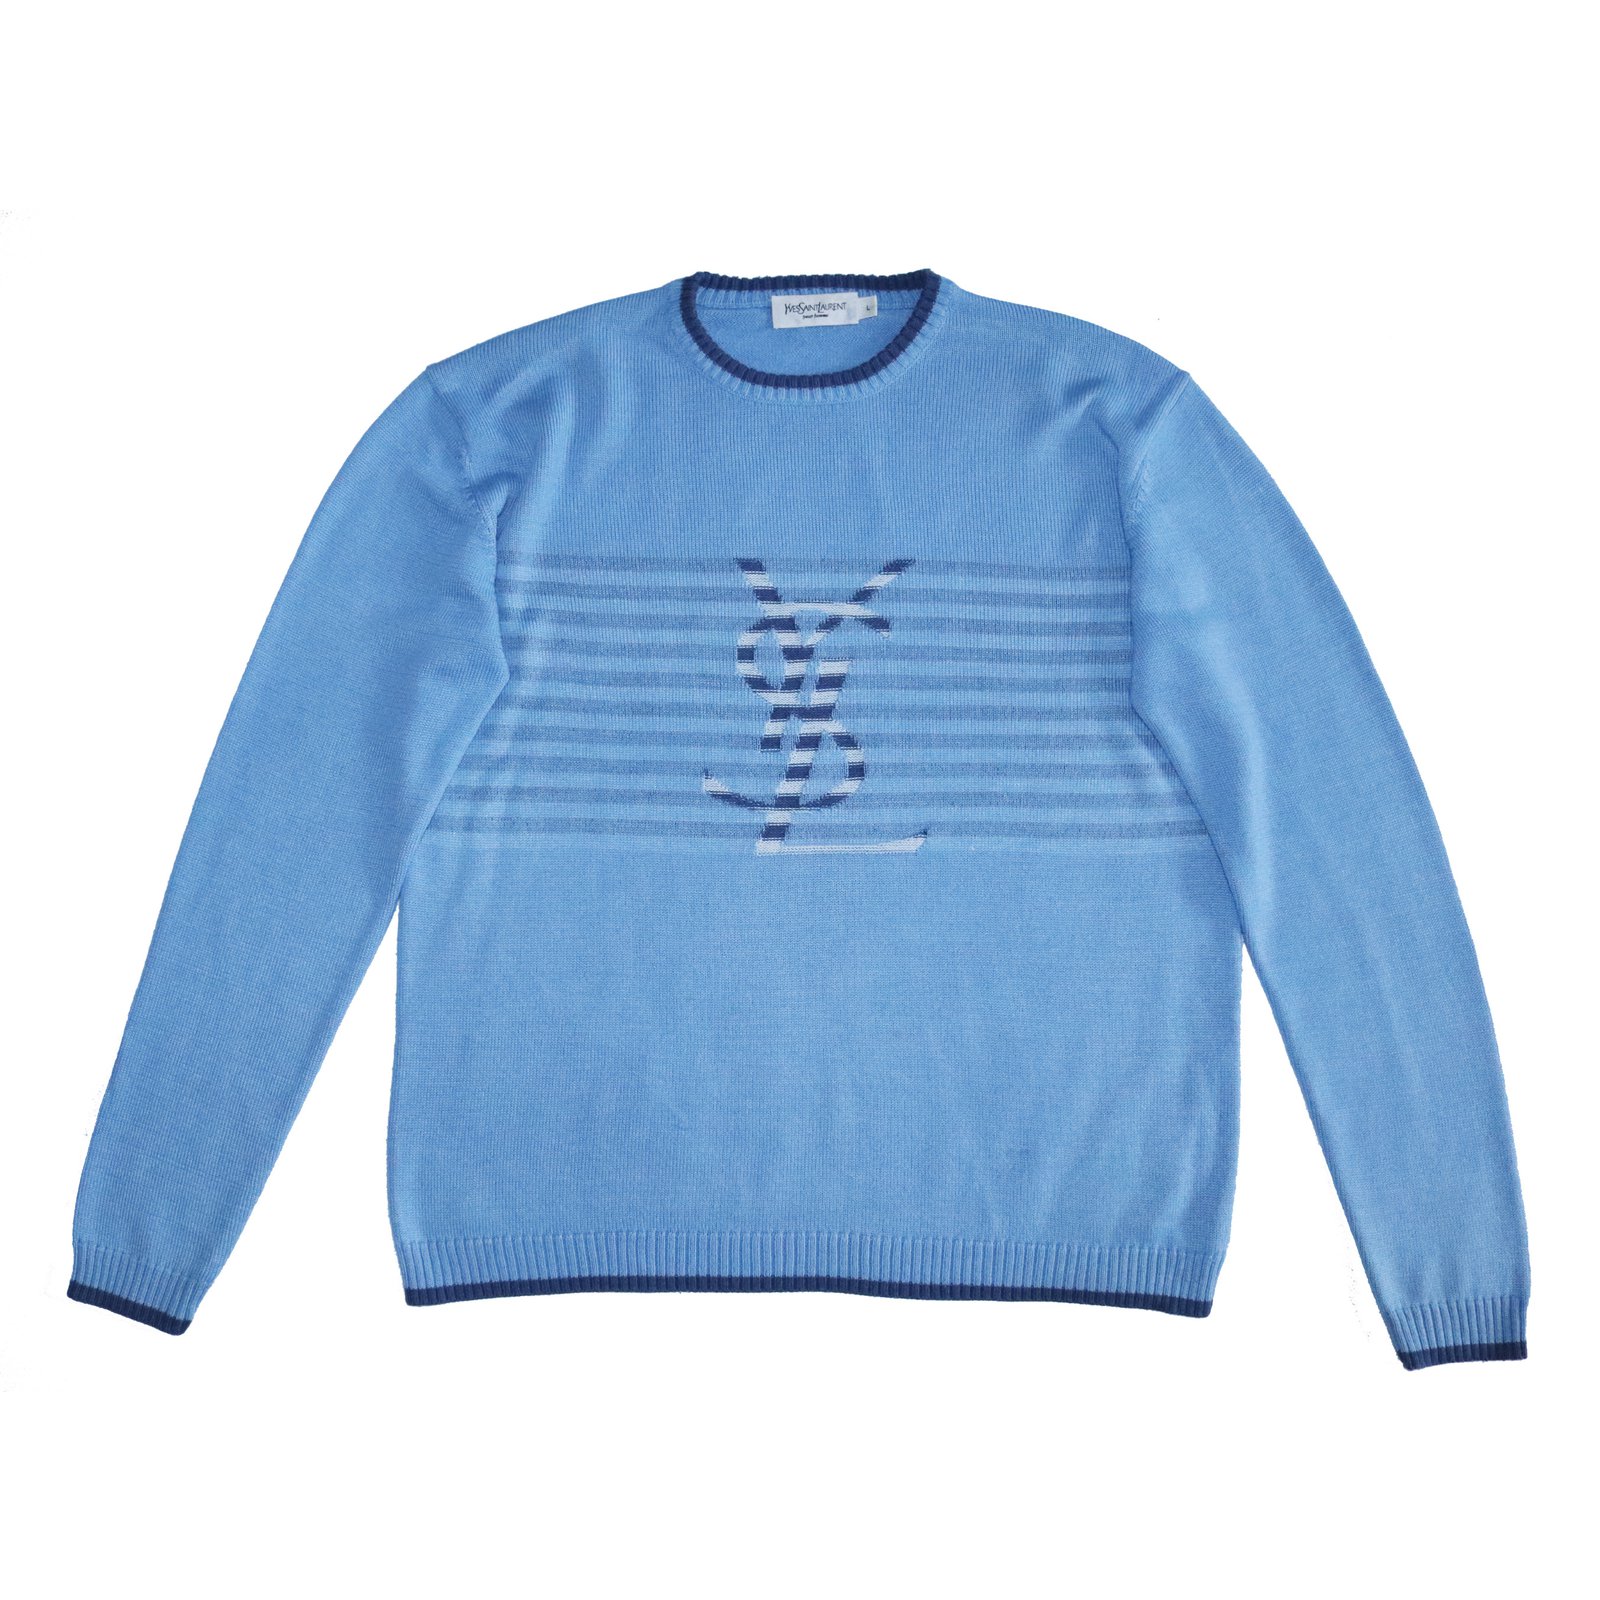 Yves Saint Laurent Sweater (Large)